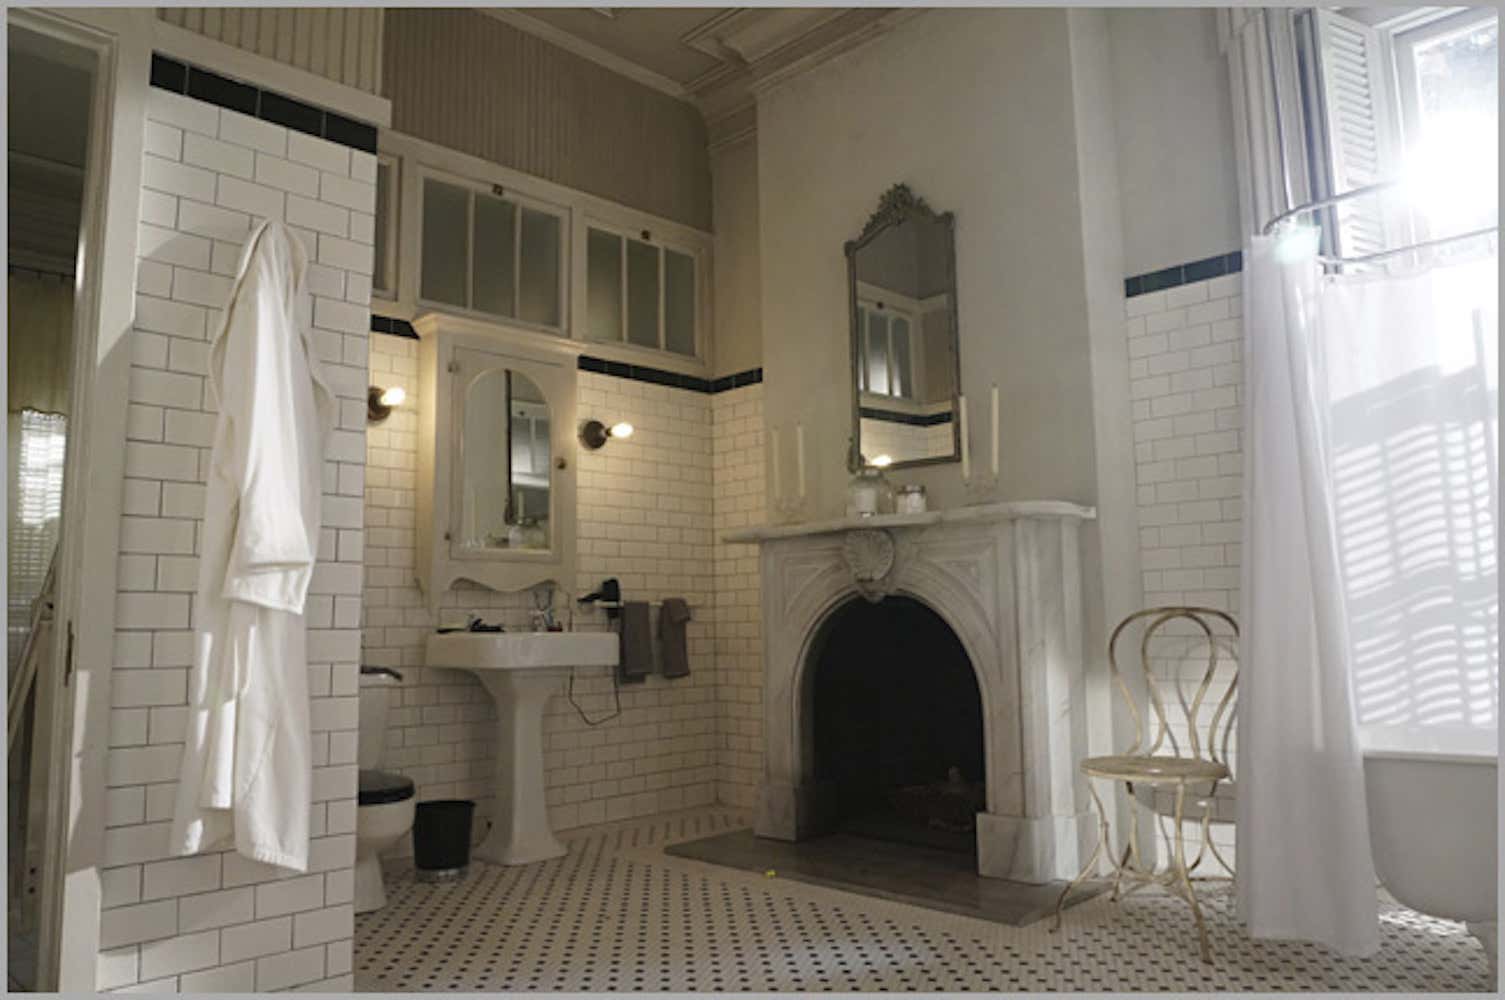 Victorian Bathroom